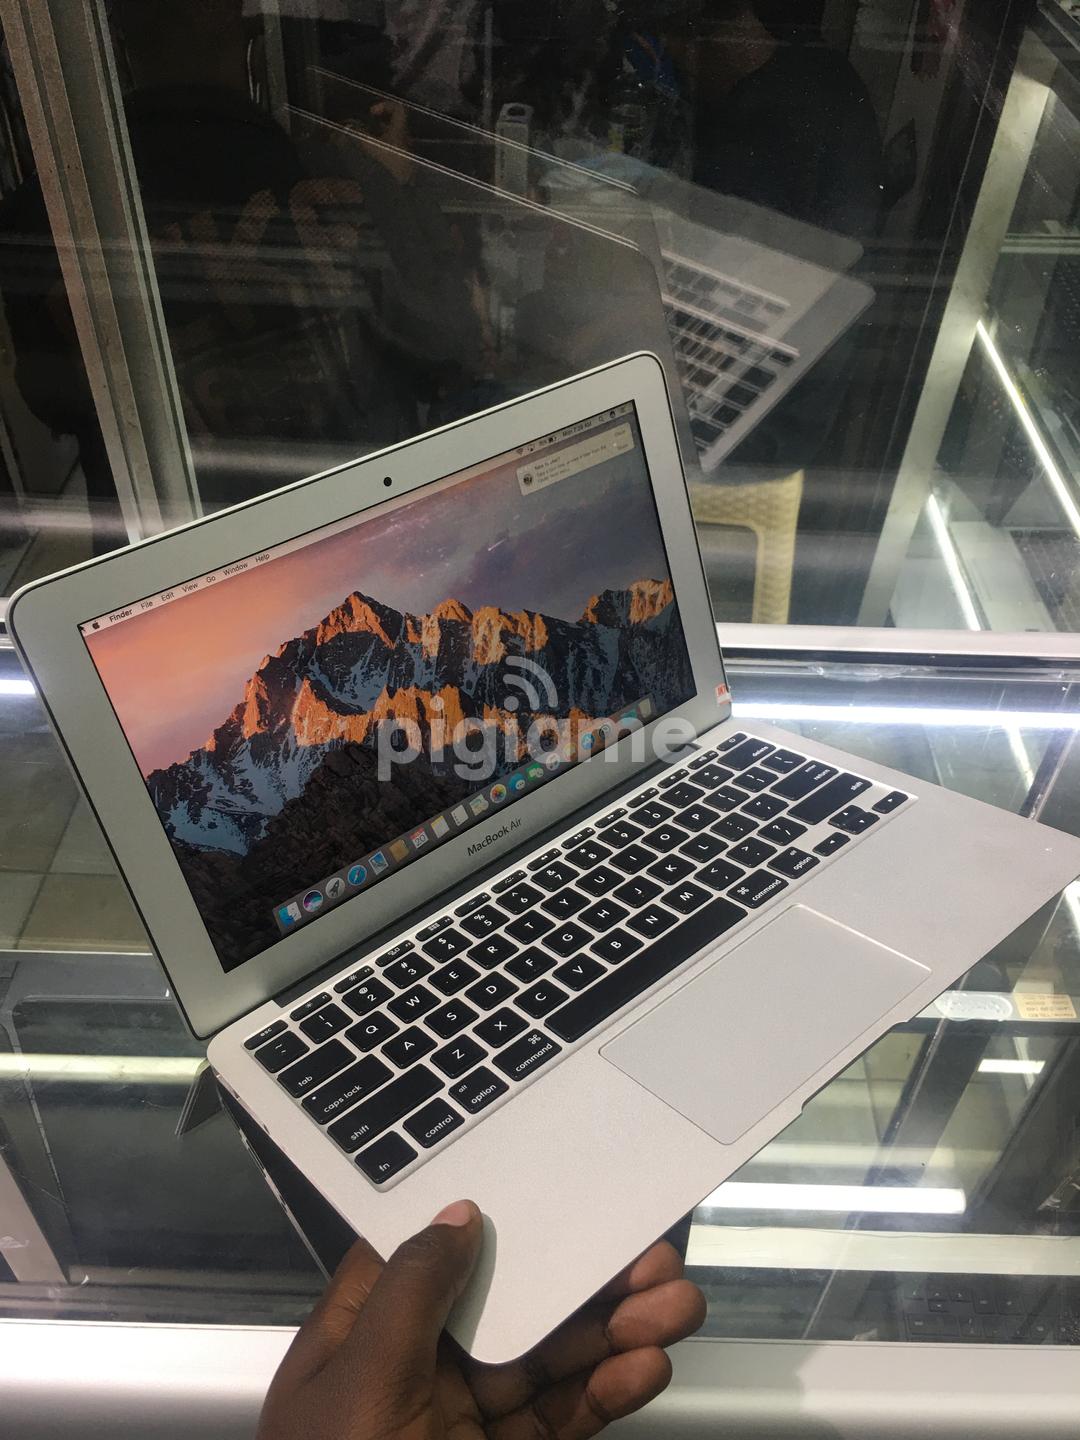 無料-Mac (Apple) - MacBook Air 11インチ - corseterialaconchita.mx